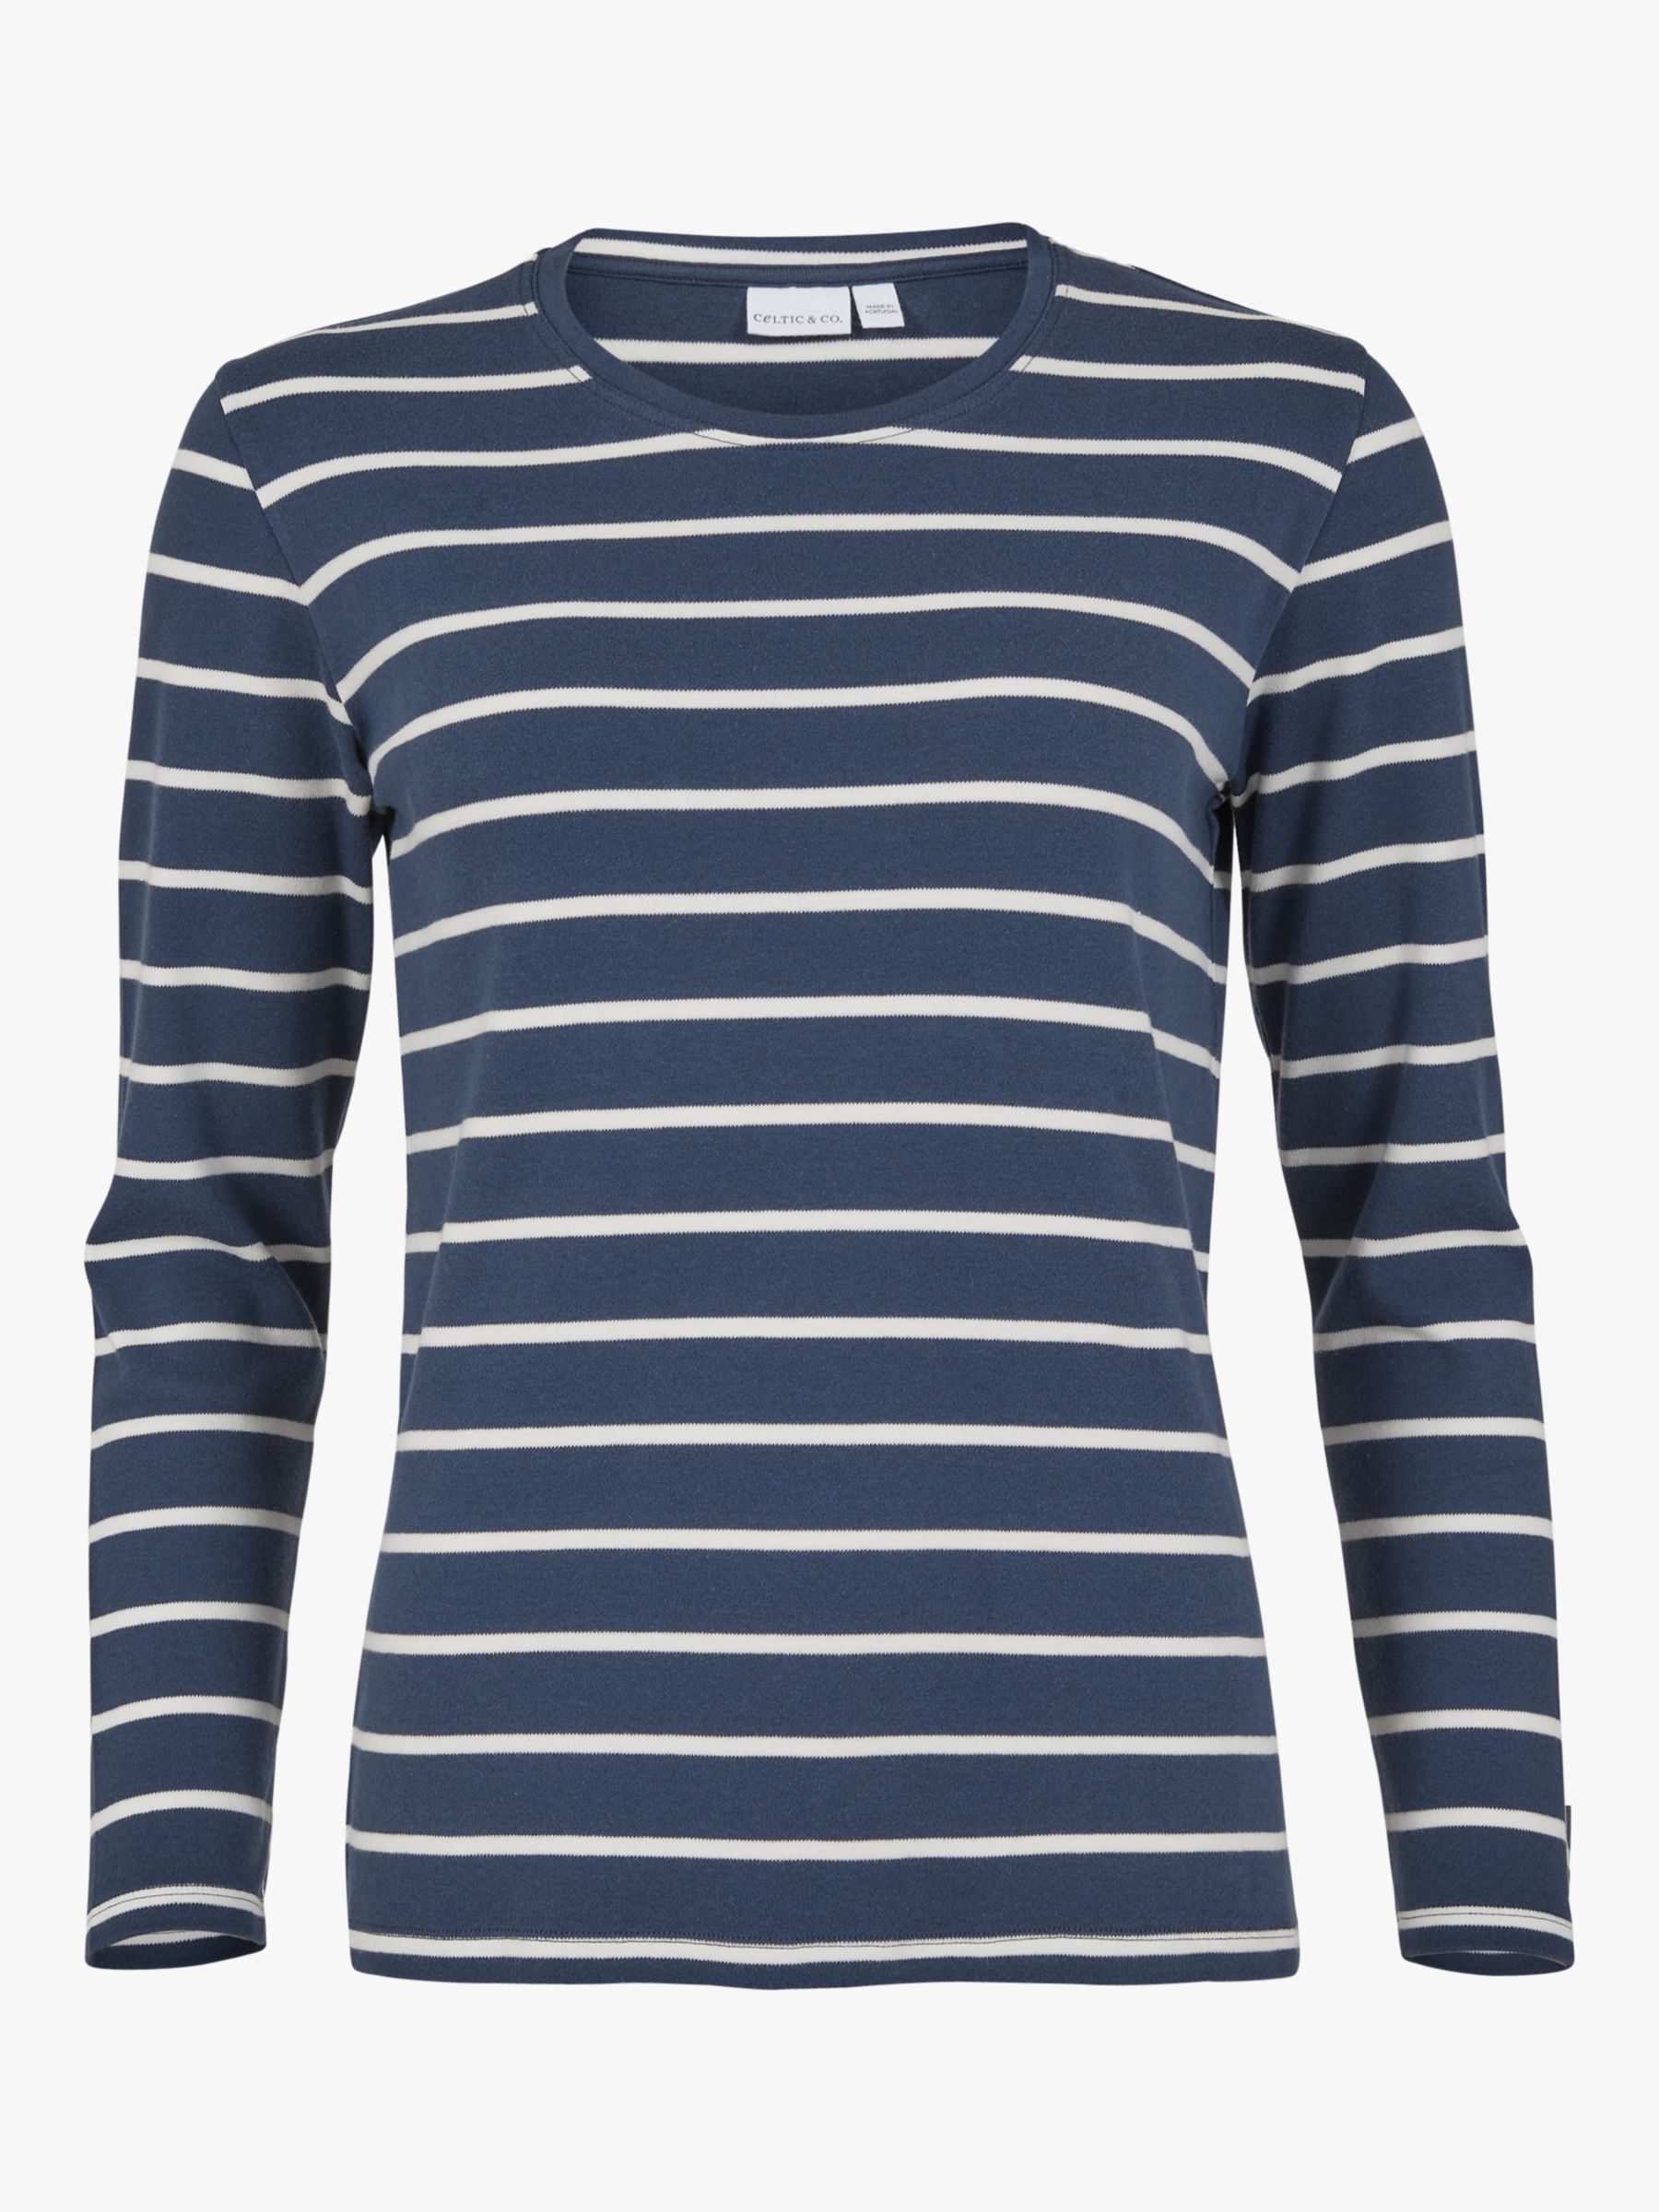 Celtic & Co. Stripe Long Sleeve T-Shirt